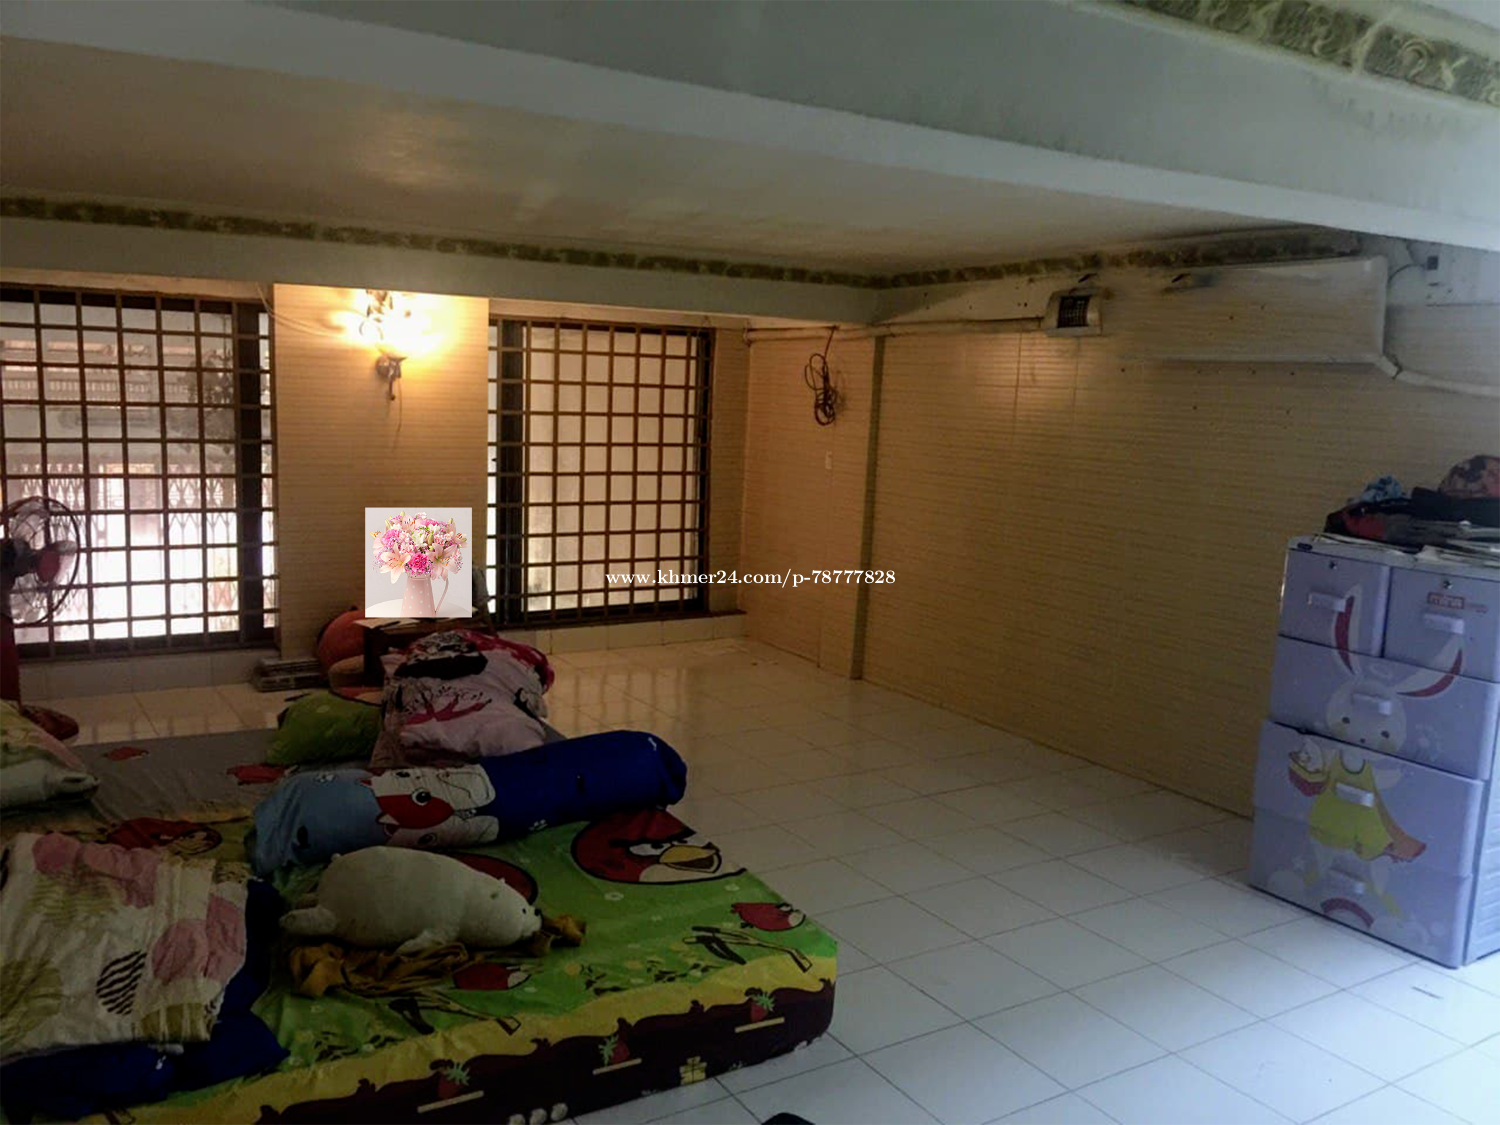 House for Rent in Boeng Keng Kang3, $400/month 房屋出租 $400 